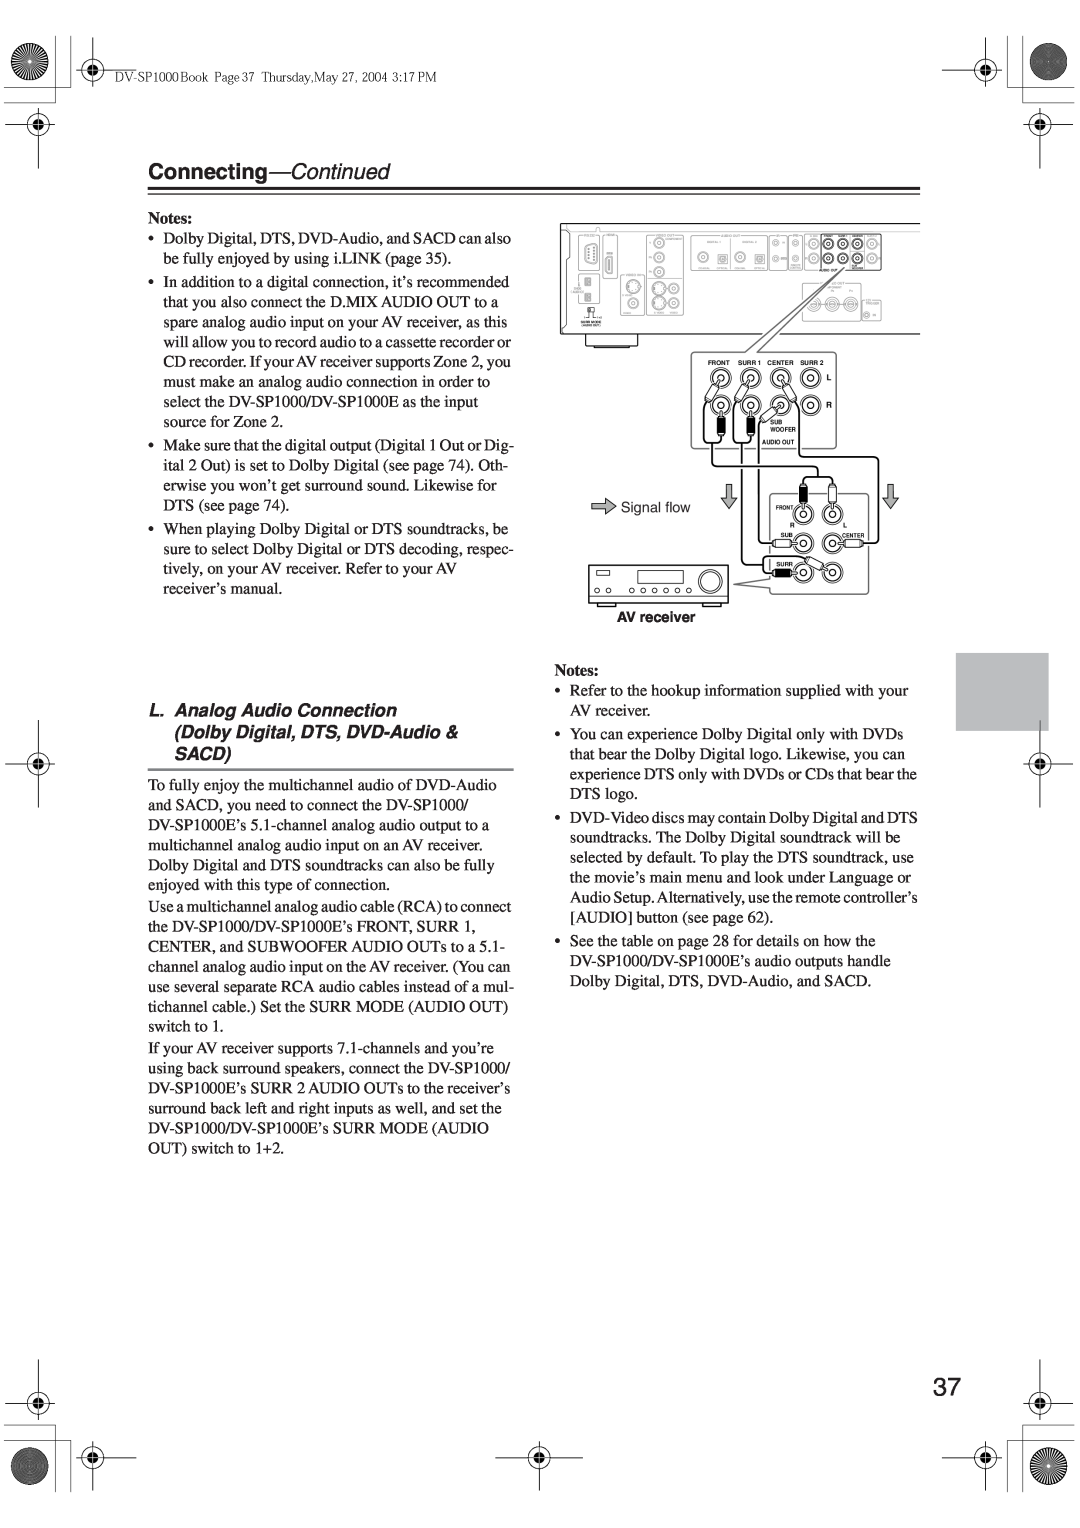 Onkyo DV-SP1000E instruction manual Connecting—Continued, Notes, FRONT SURR 1 CENTER SURR, Sub Woofer Audio Out 